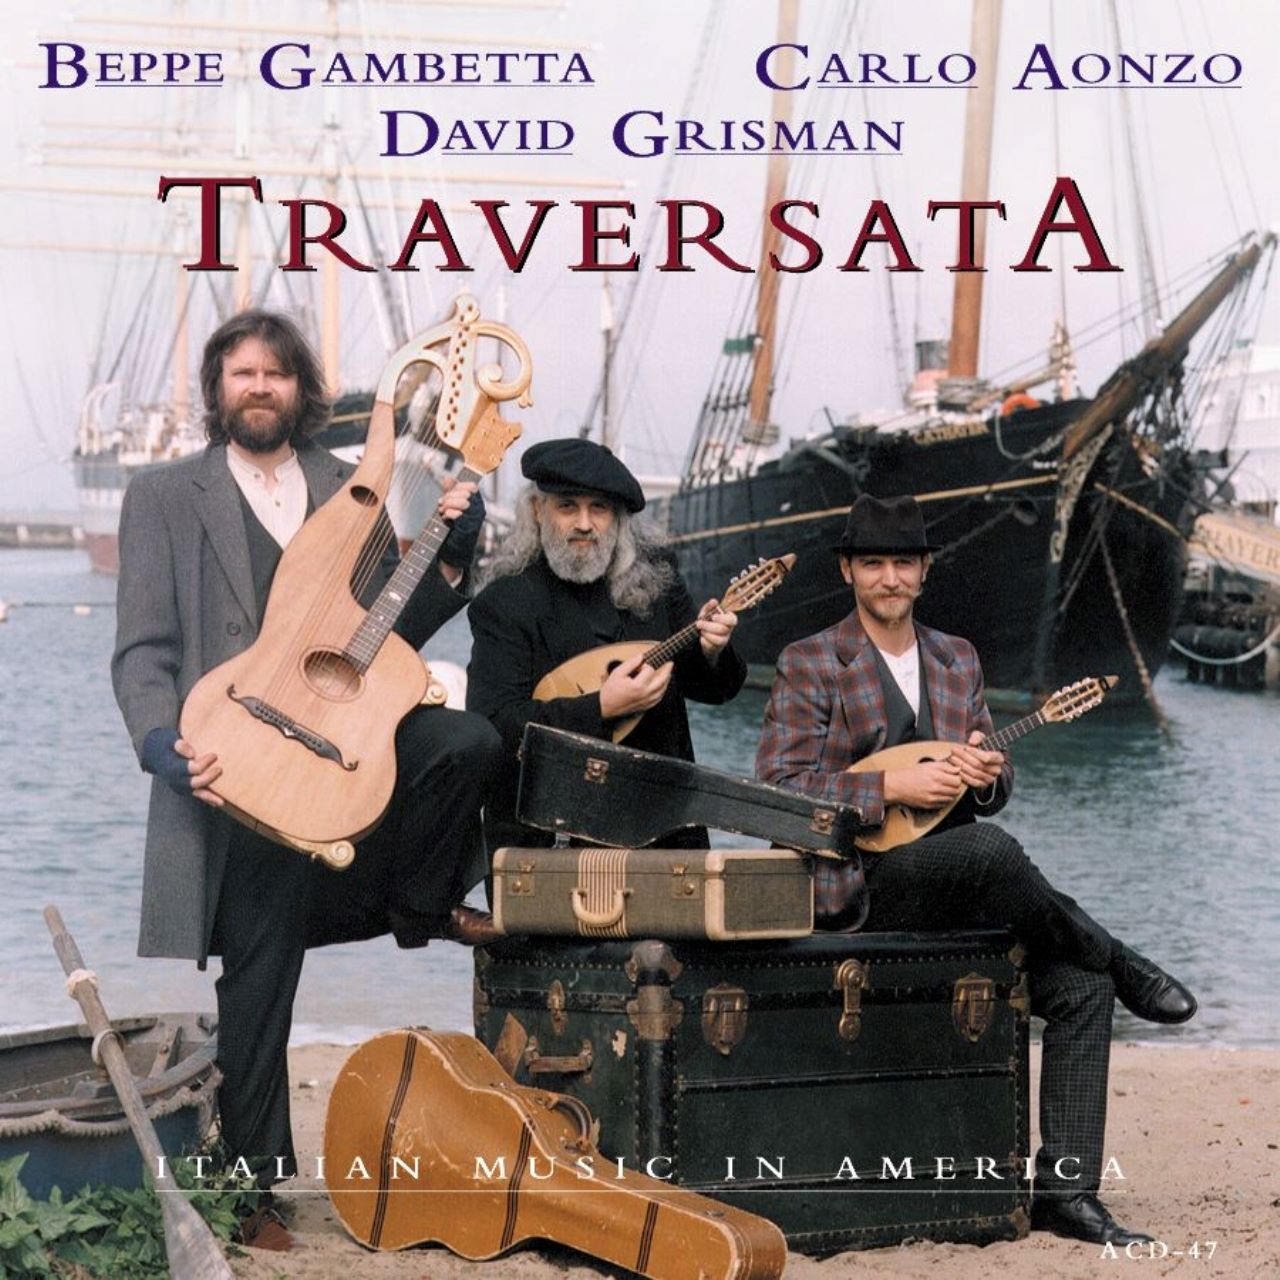 Gambetta, Aonzo & Grisman – Traversata cover album